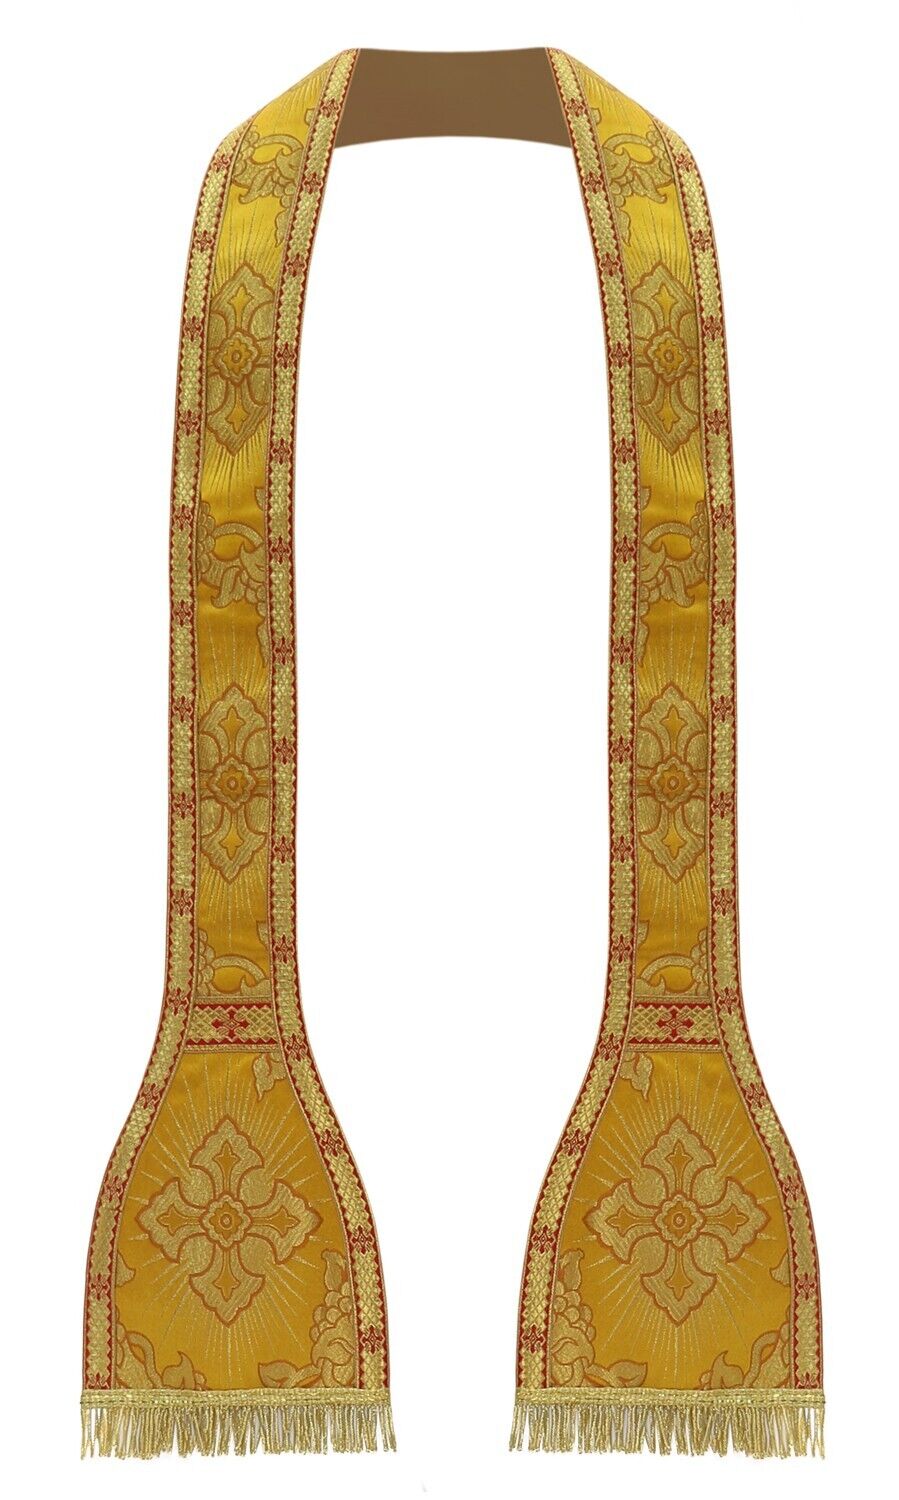 Gold/red Roman Clergy Stole Vestment Chasuble Cope Estola Dorada Stola S822GC9